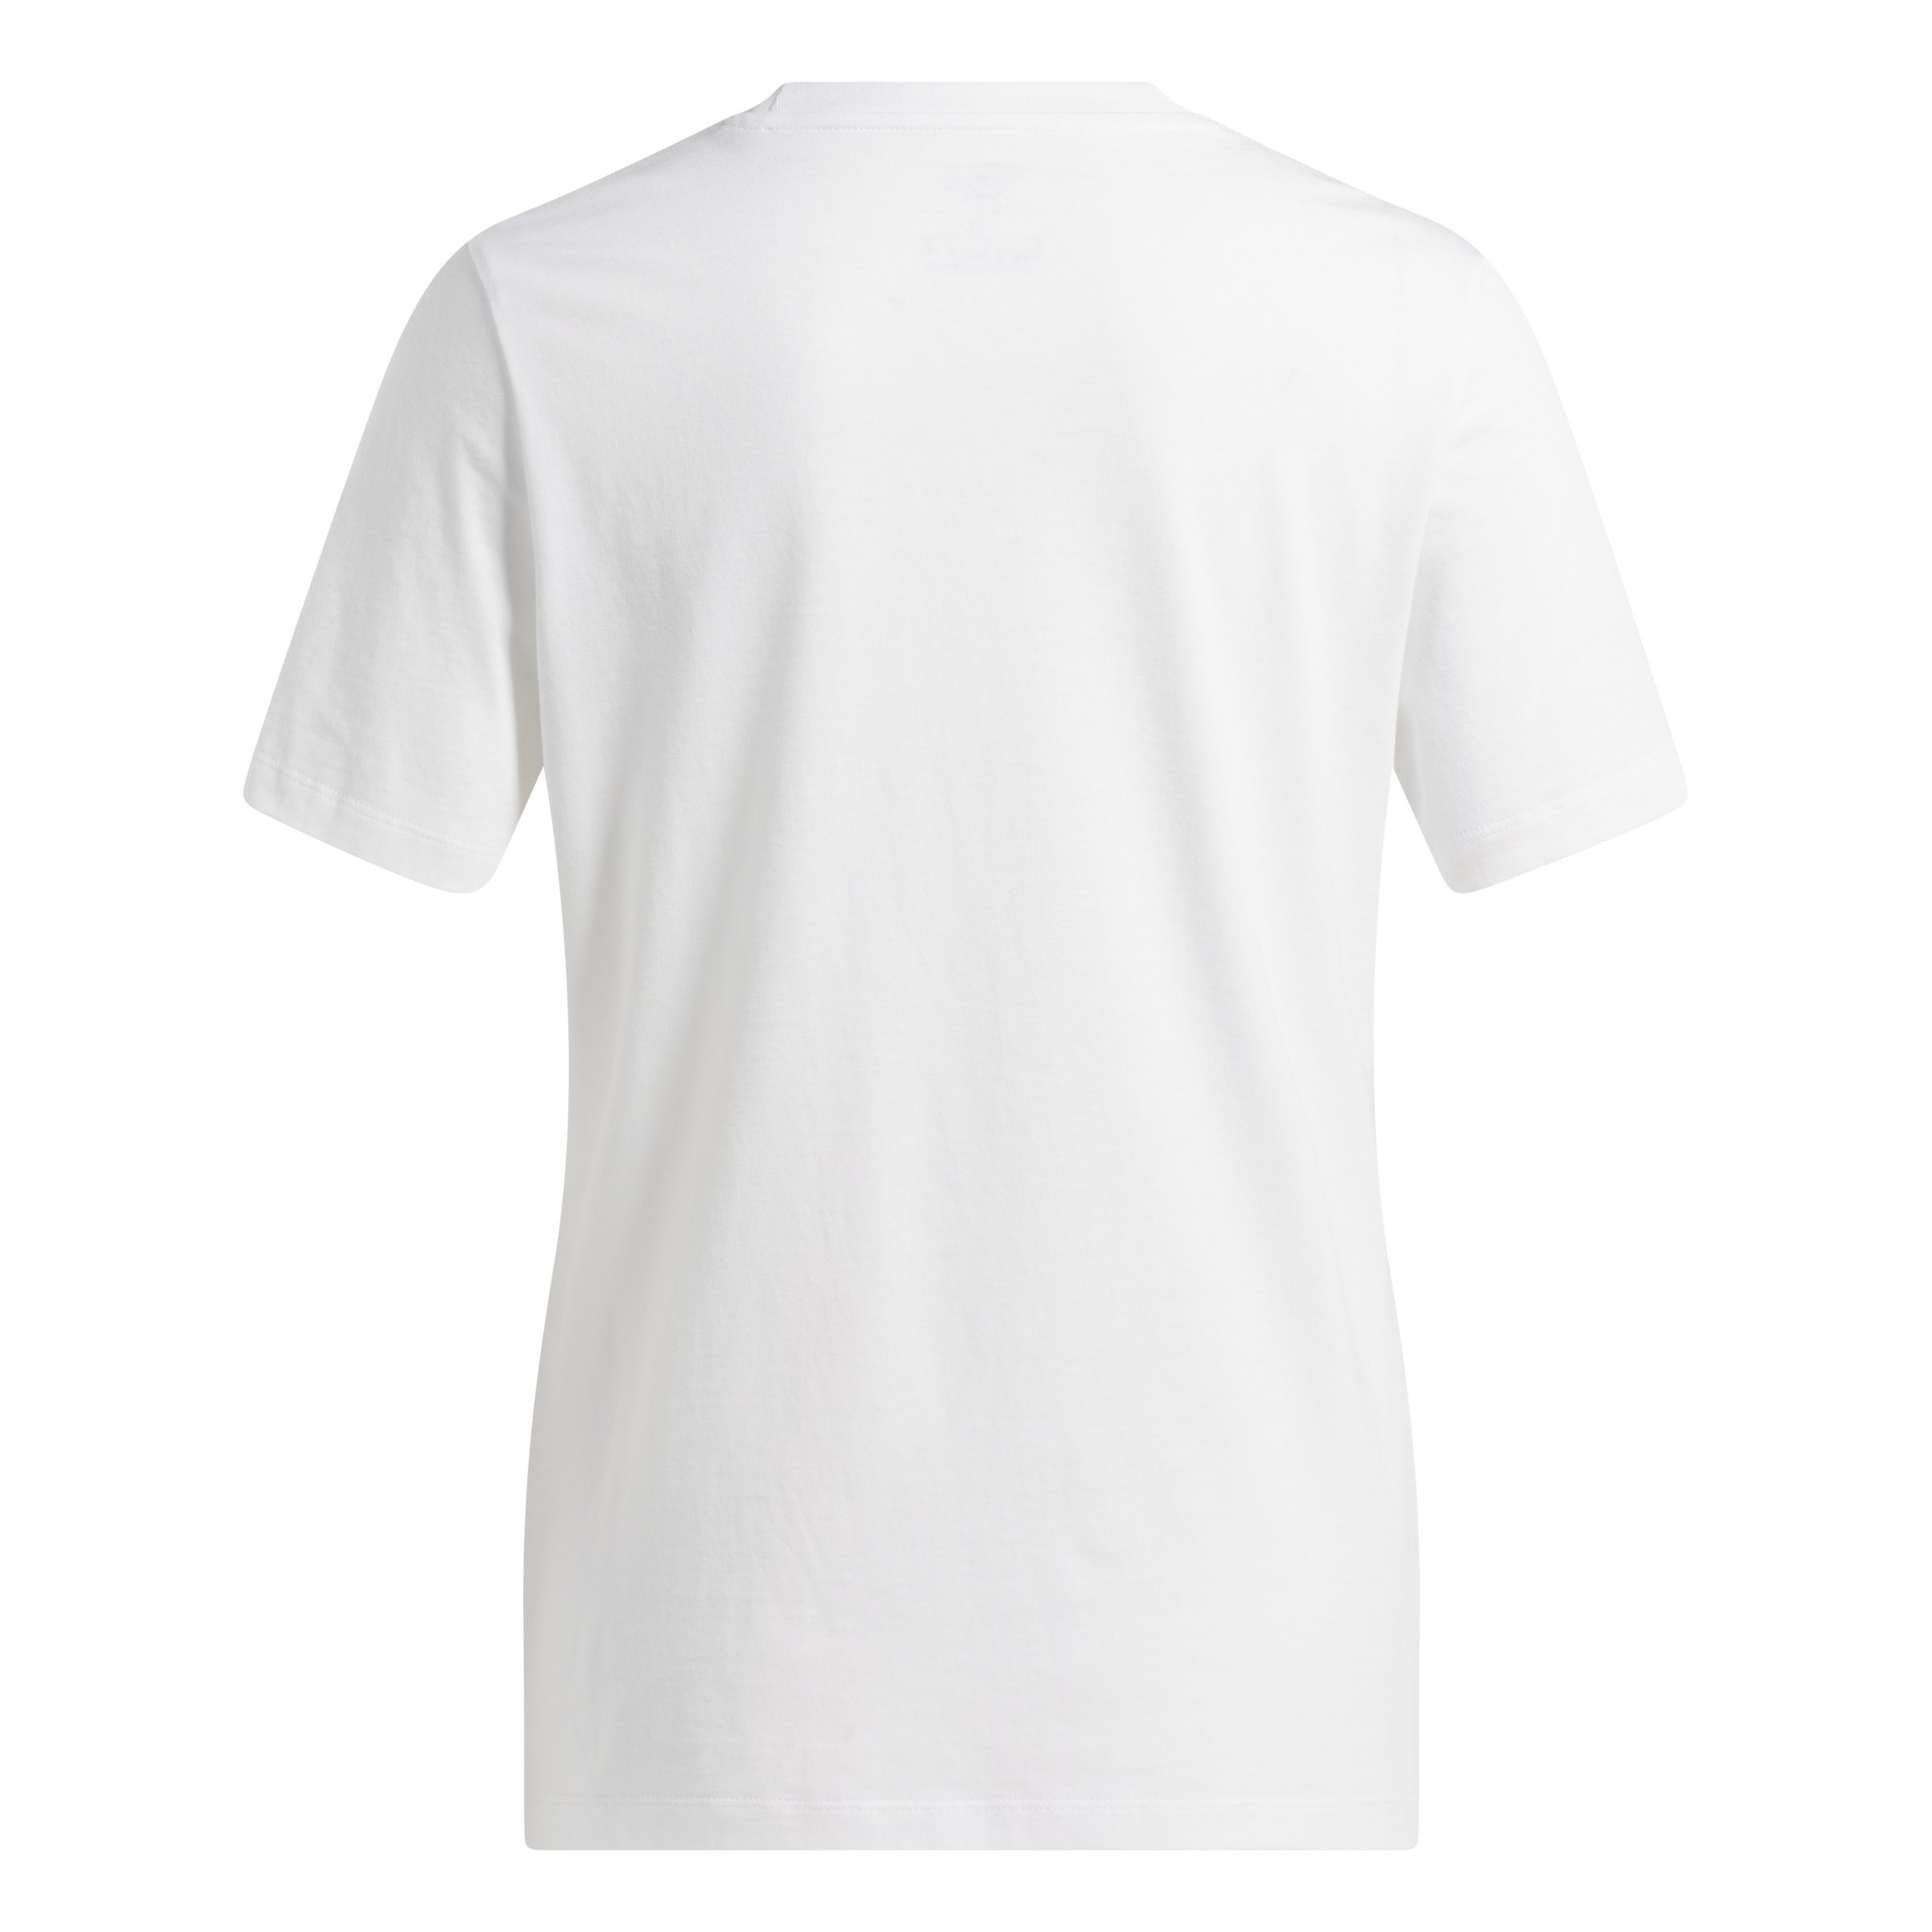 Tee Reebok white BL RI T-Shirt